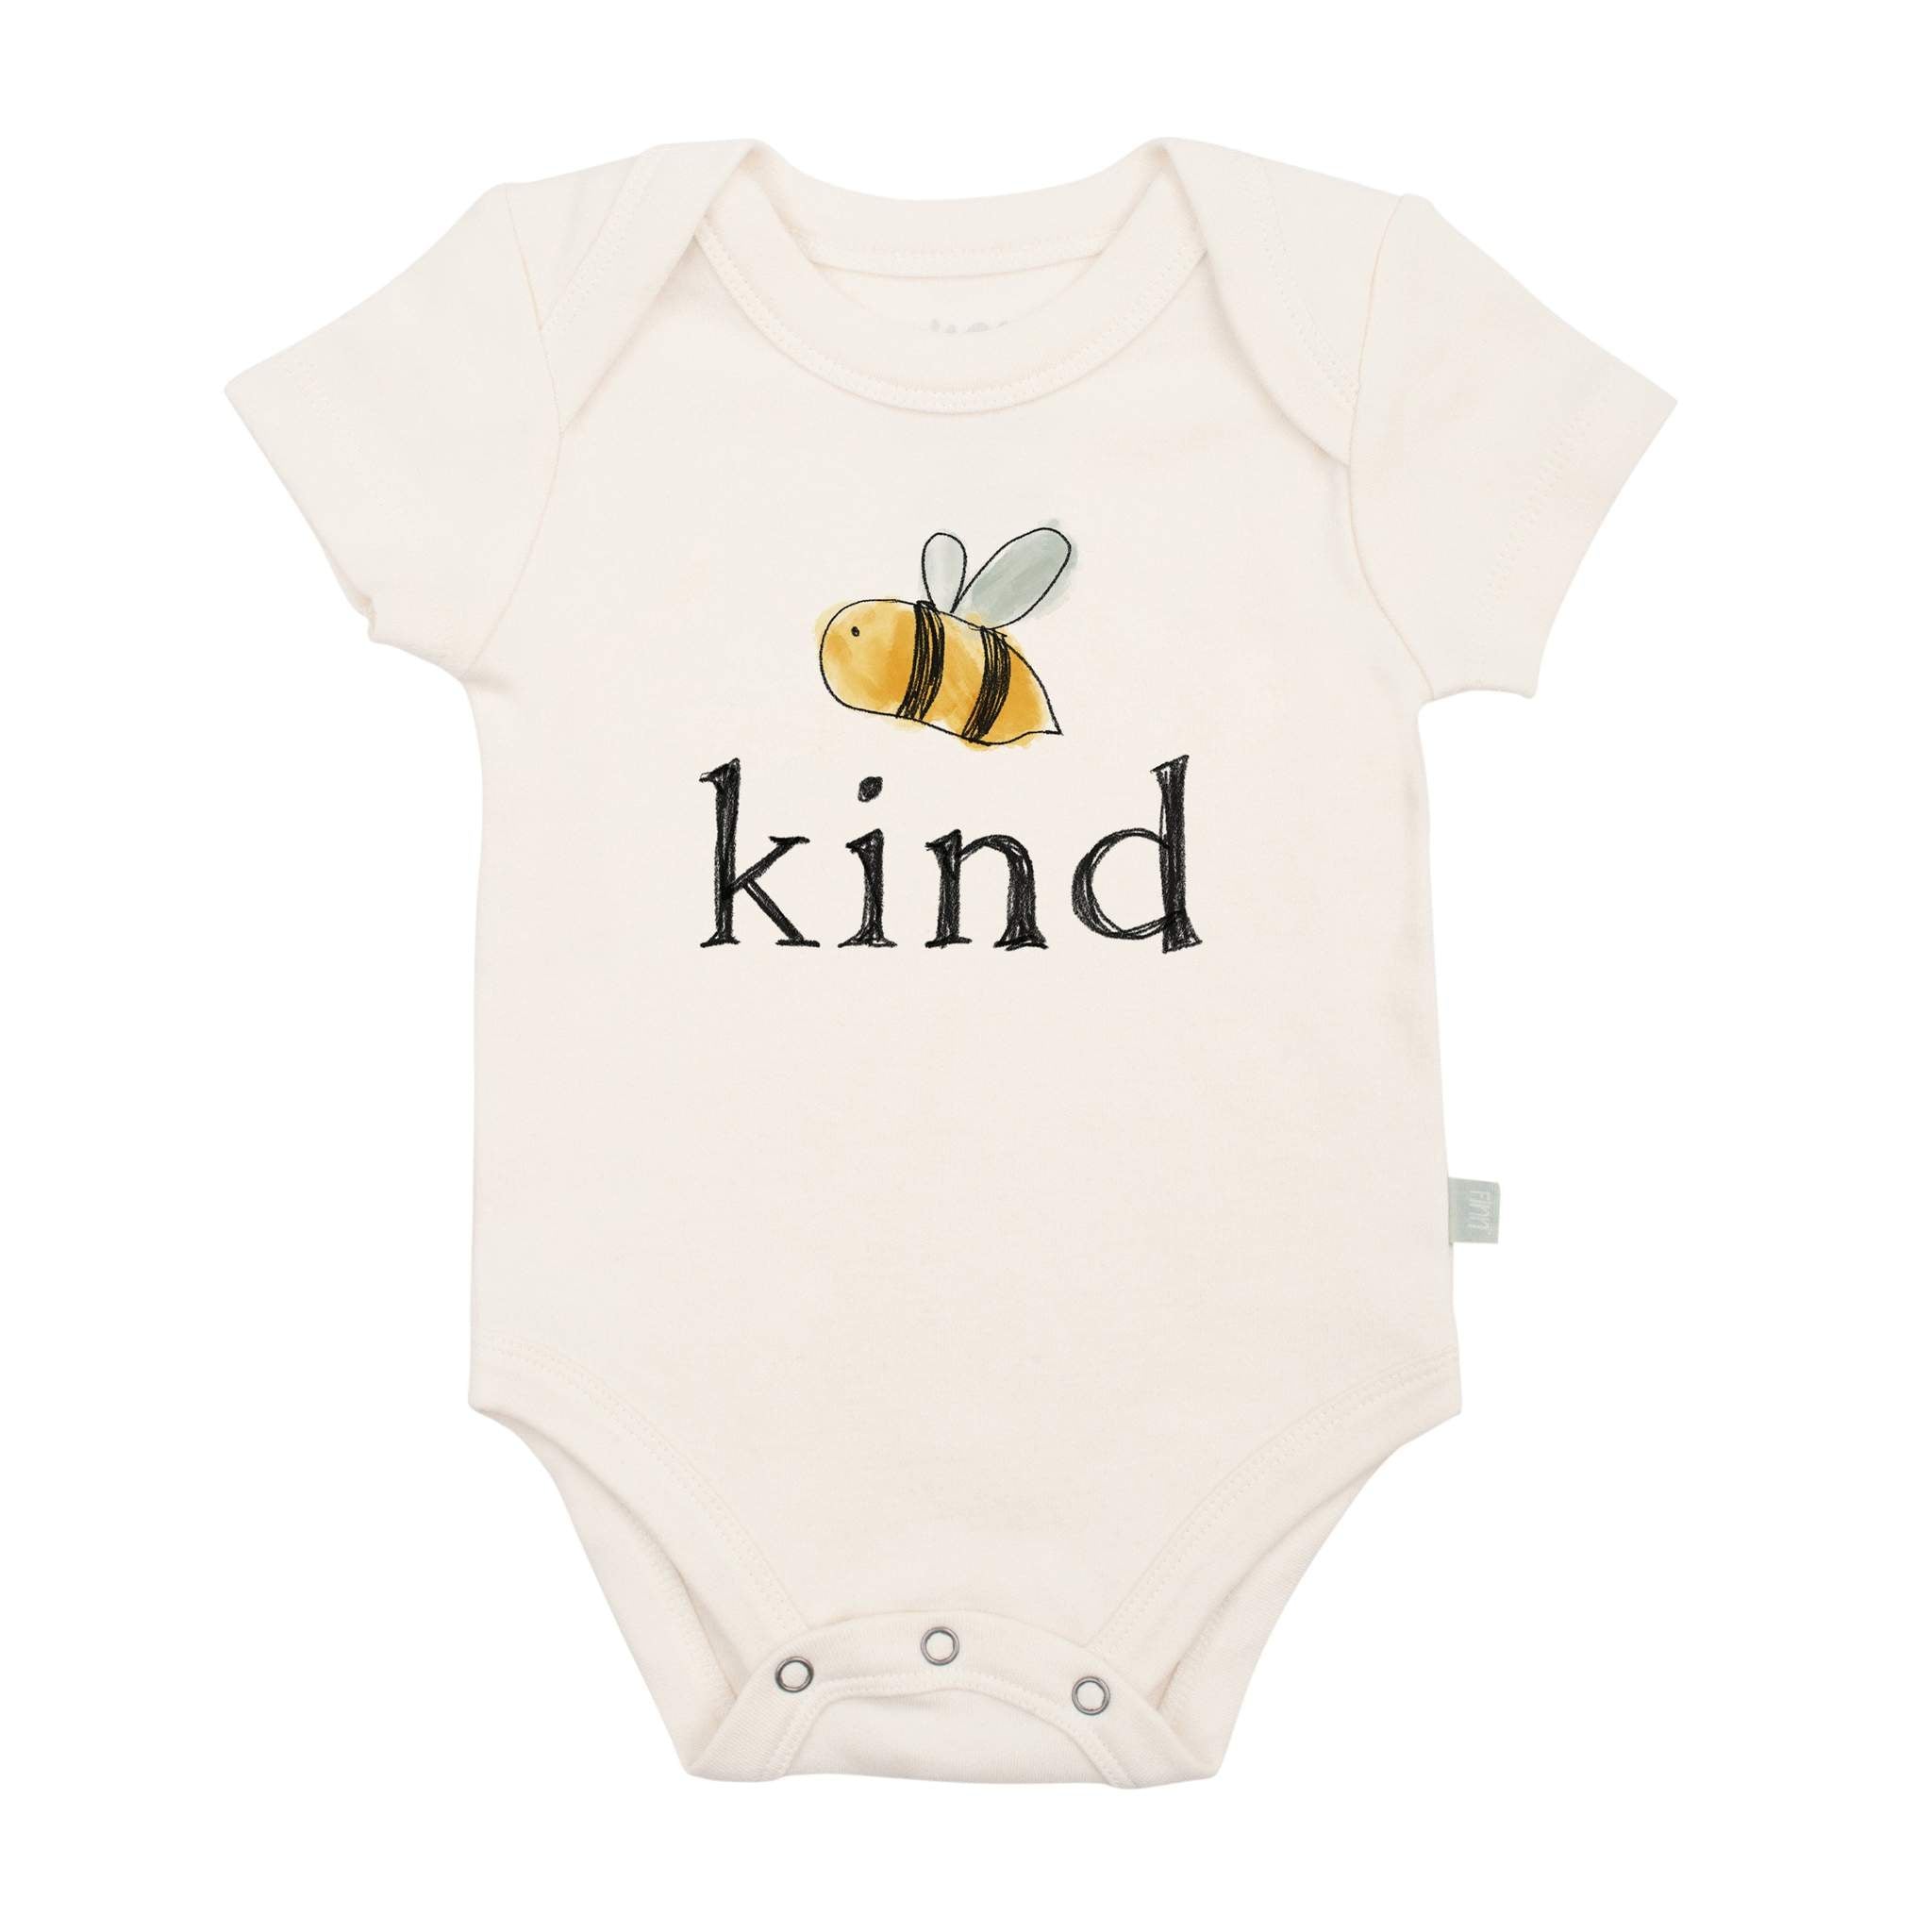 FINN + EMMA BABY BODY GRAPHIC BODYSUIT Bumble Bee